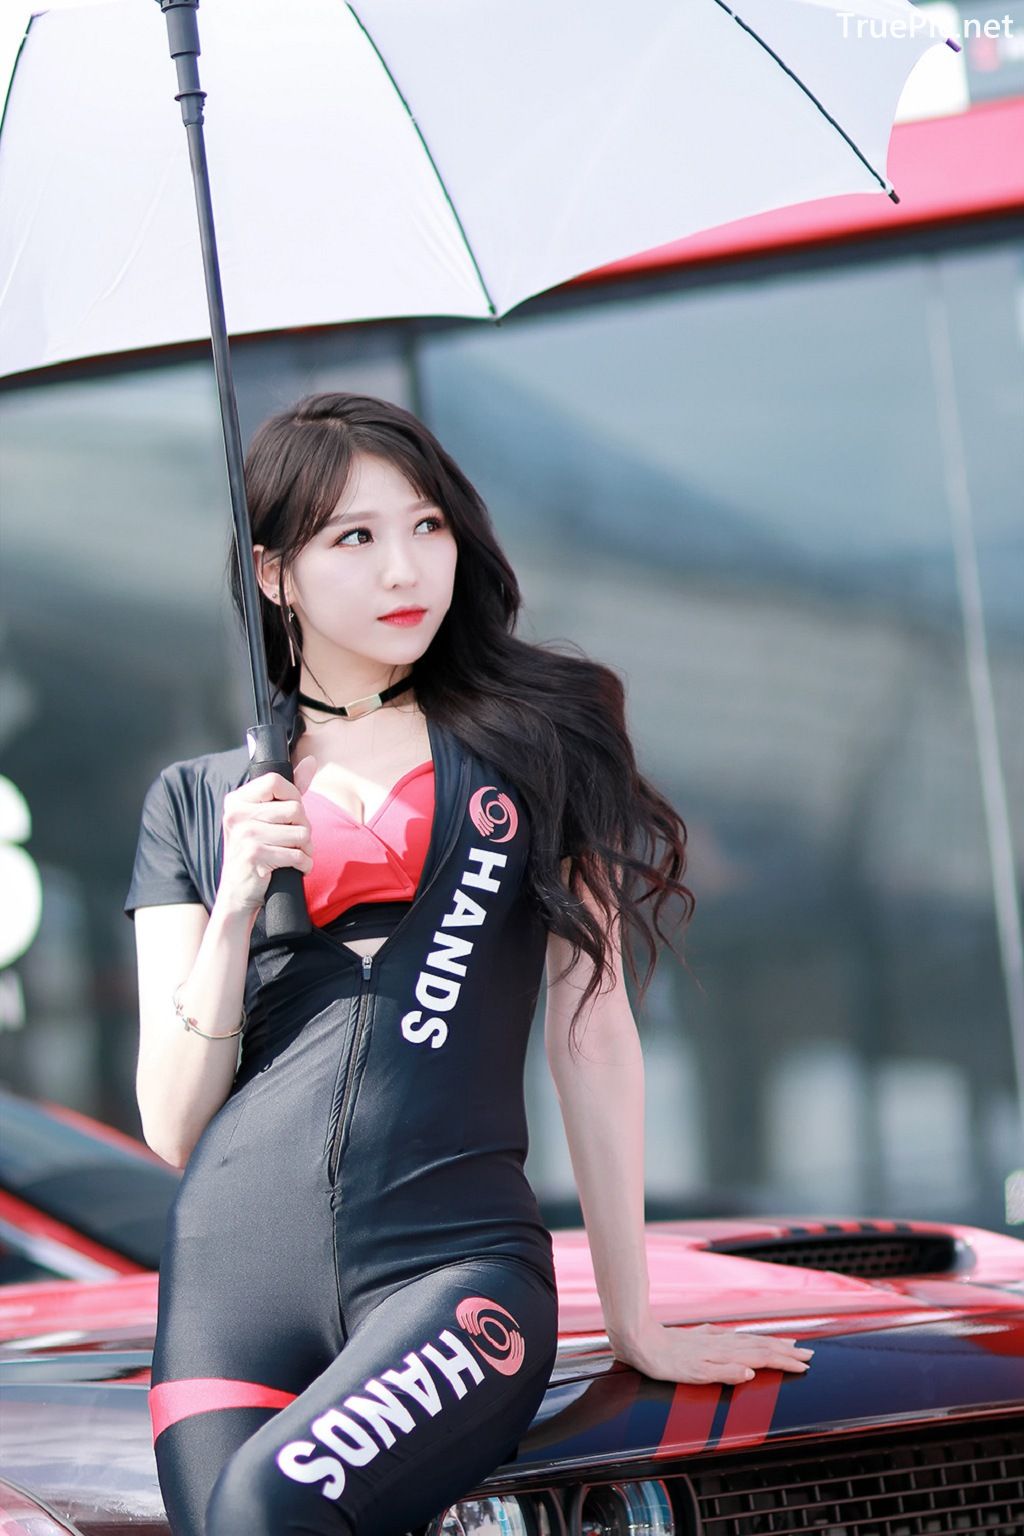 Image-Korean-Racing-Model-Lee-Eun-Hye-At-Incheon-Korea-Tuning-Festival-TruePic.net- Picture-138